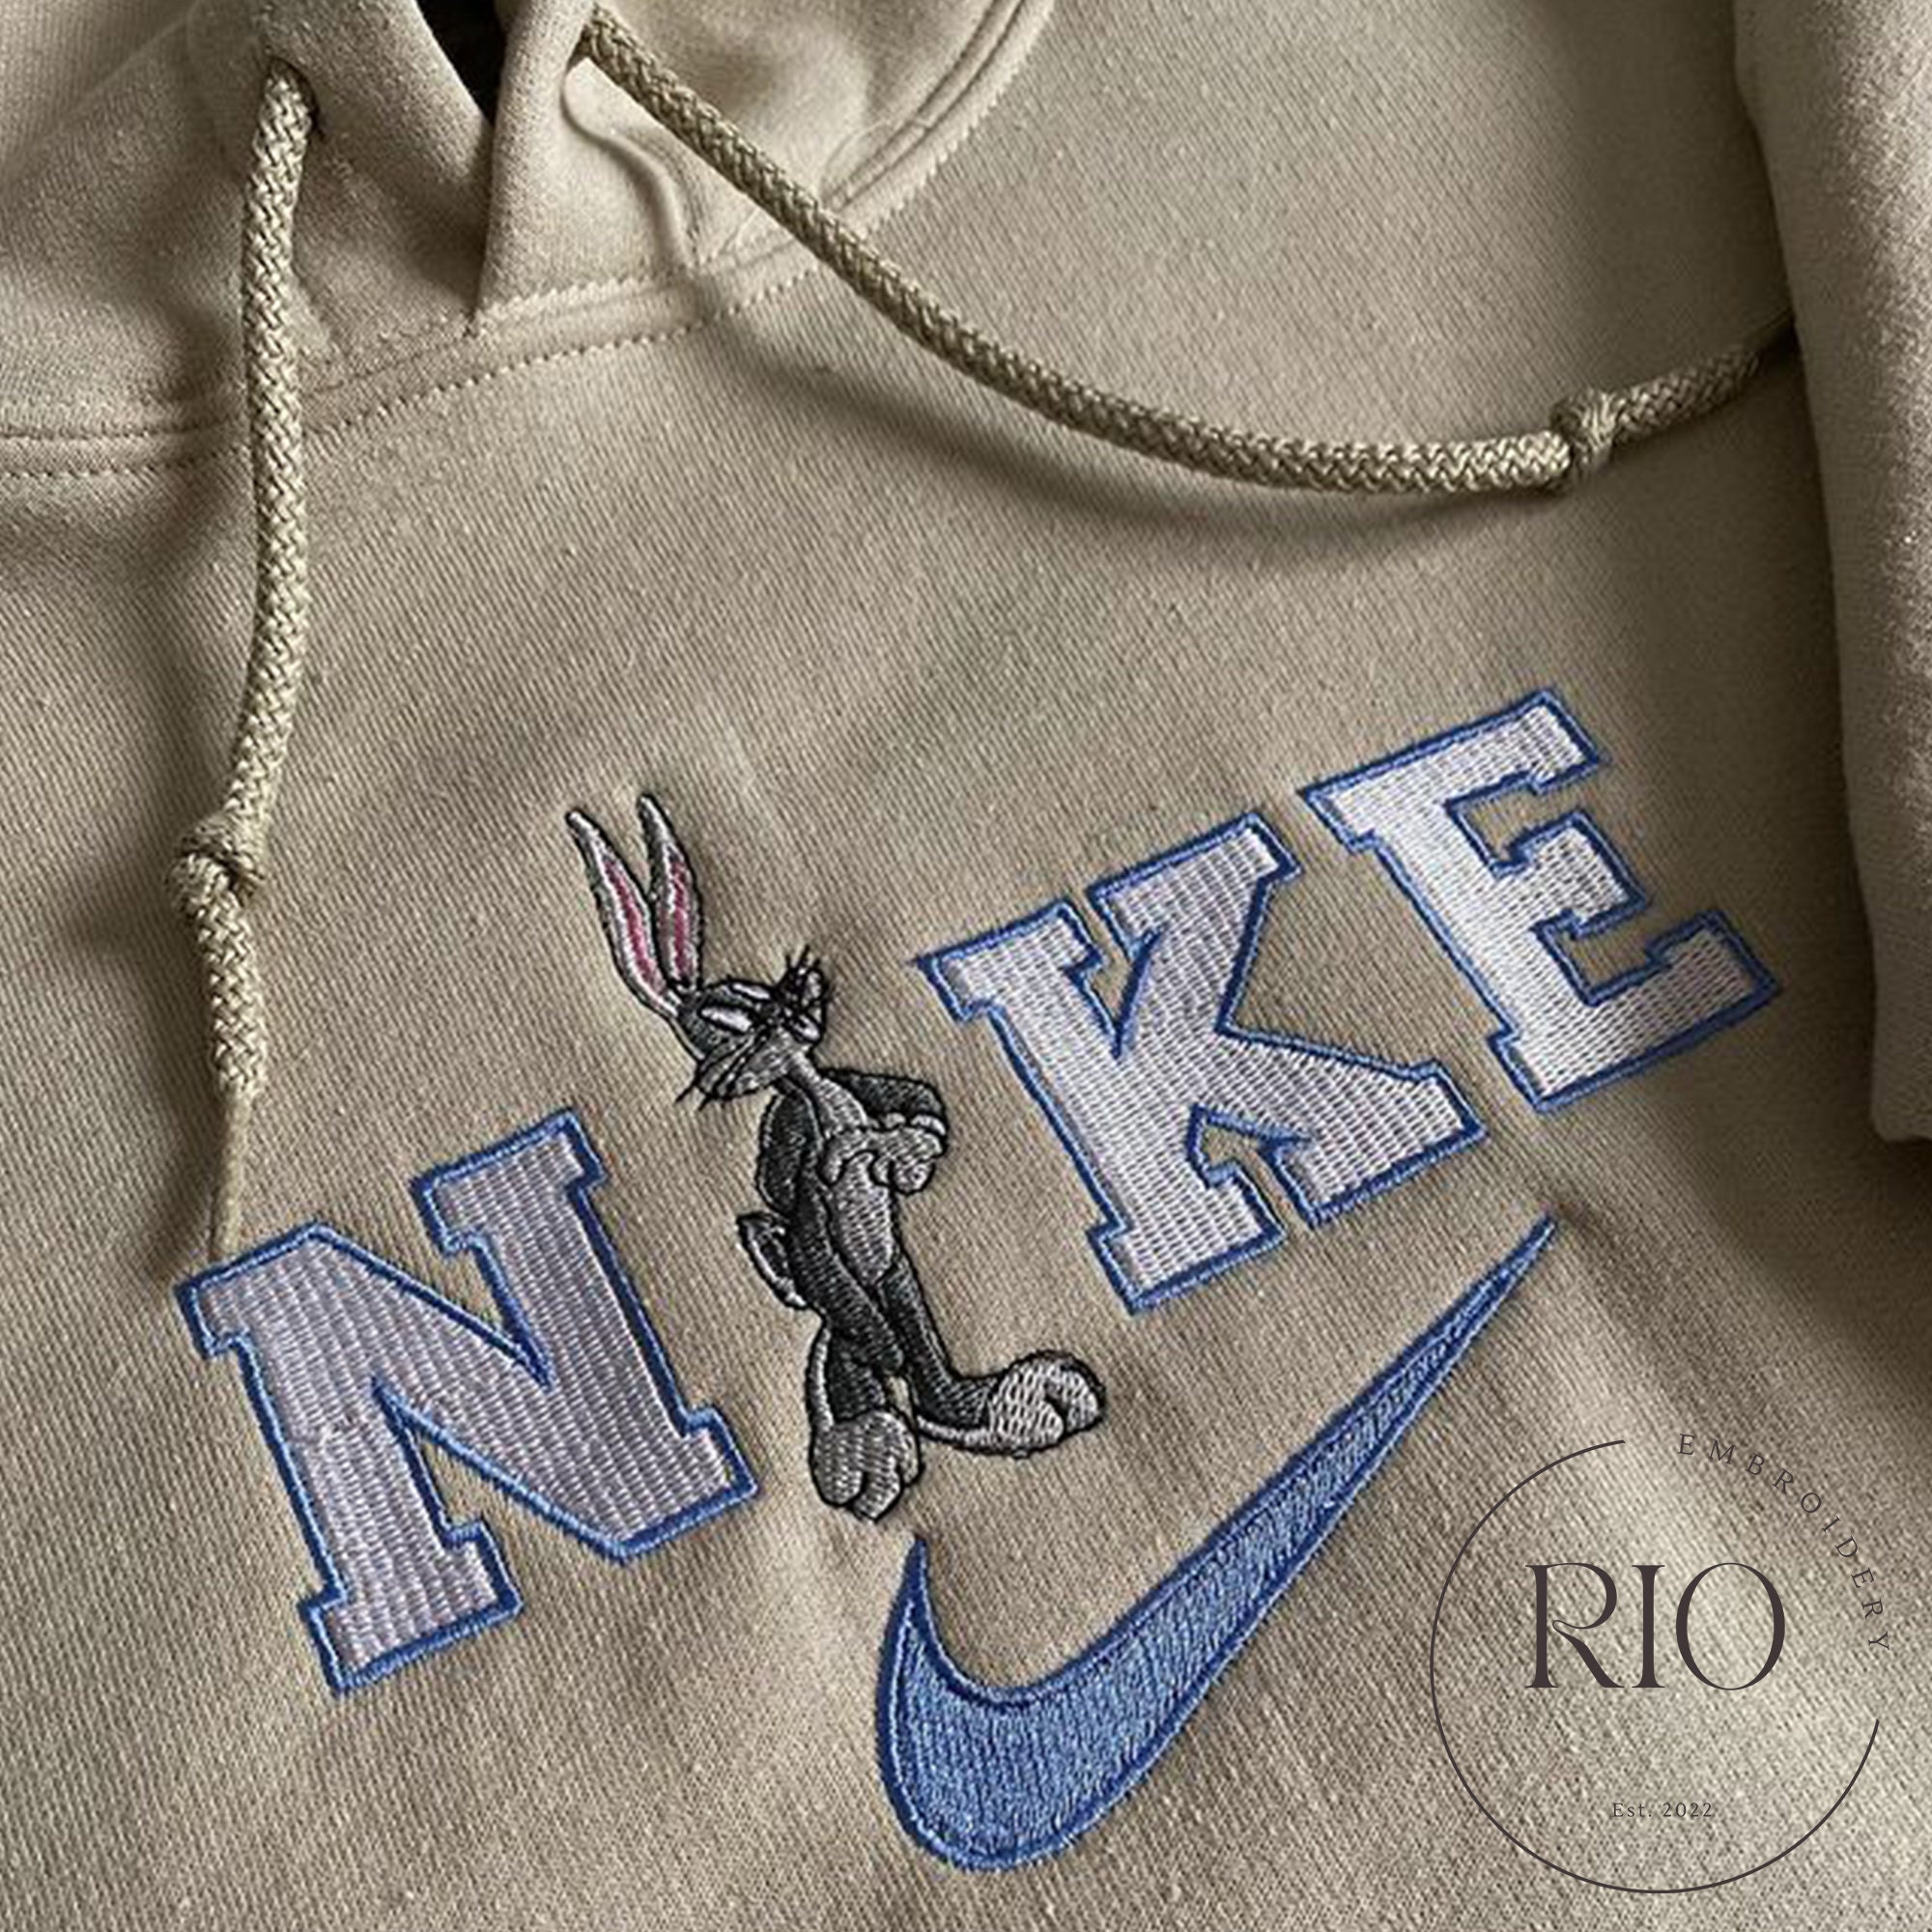 Personalized Louis Vuitton Monogram Bugs Bunny Hoodie, Pants - Tagotee